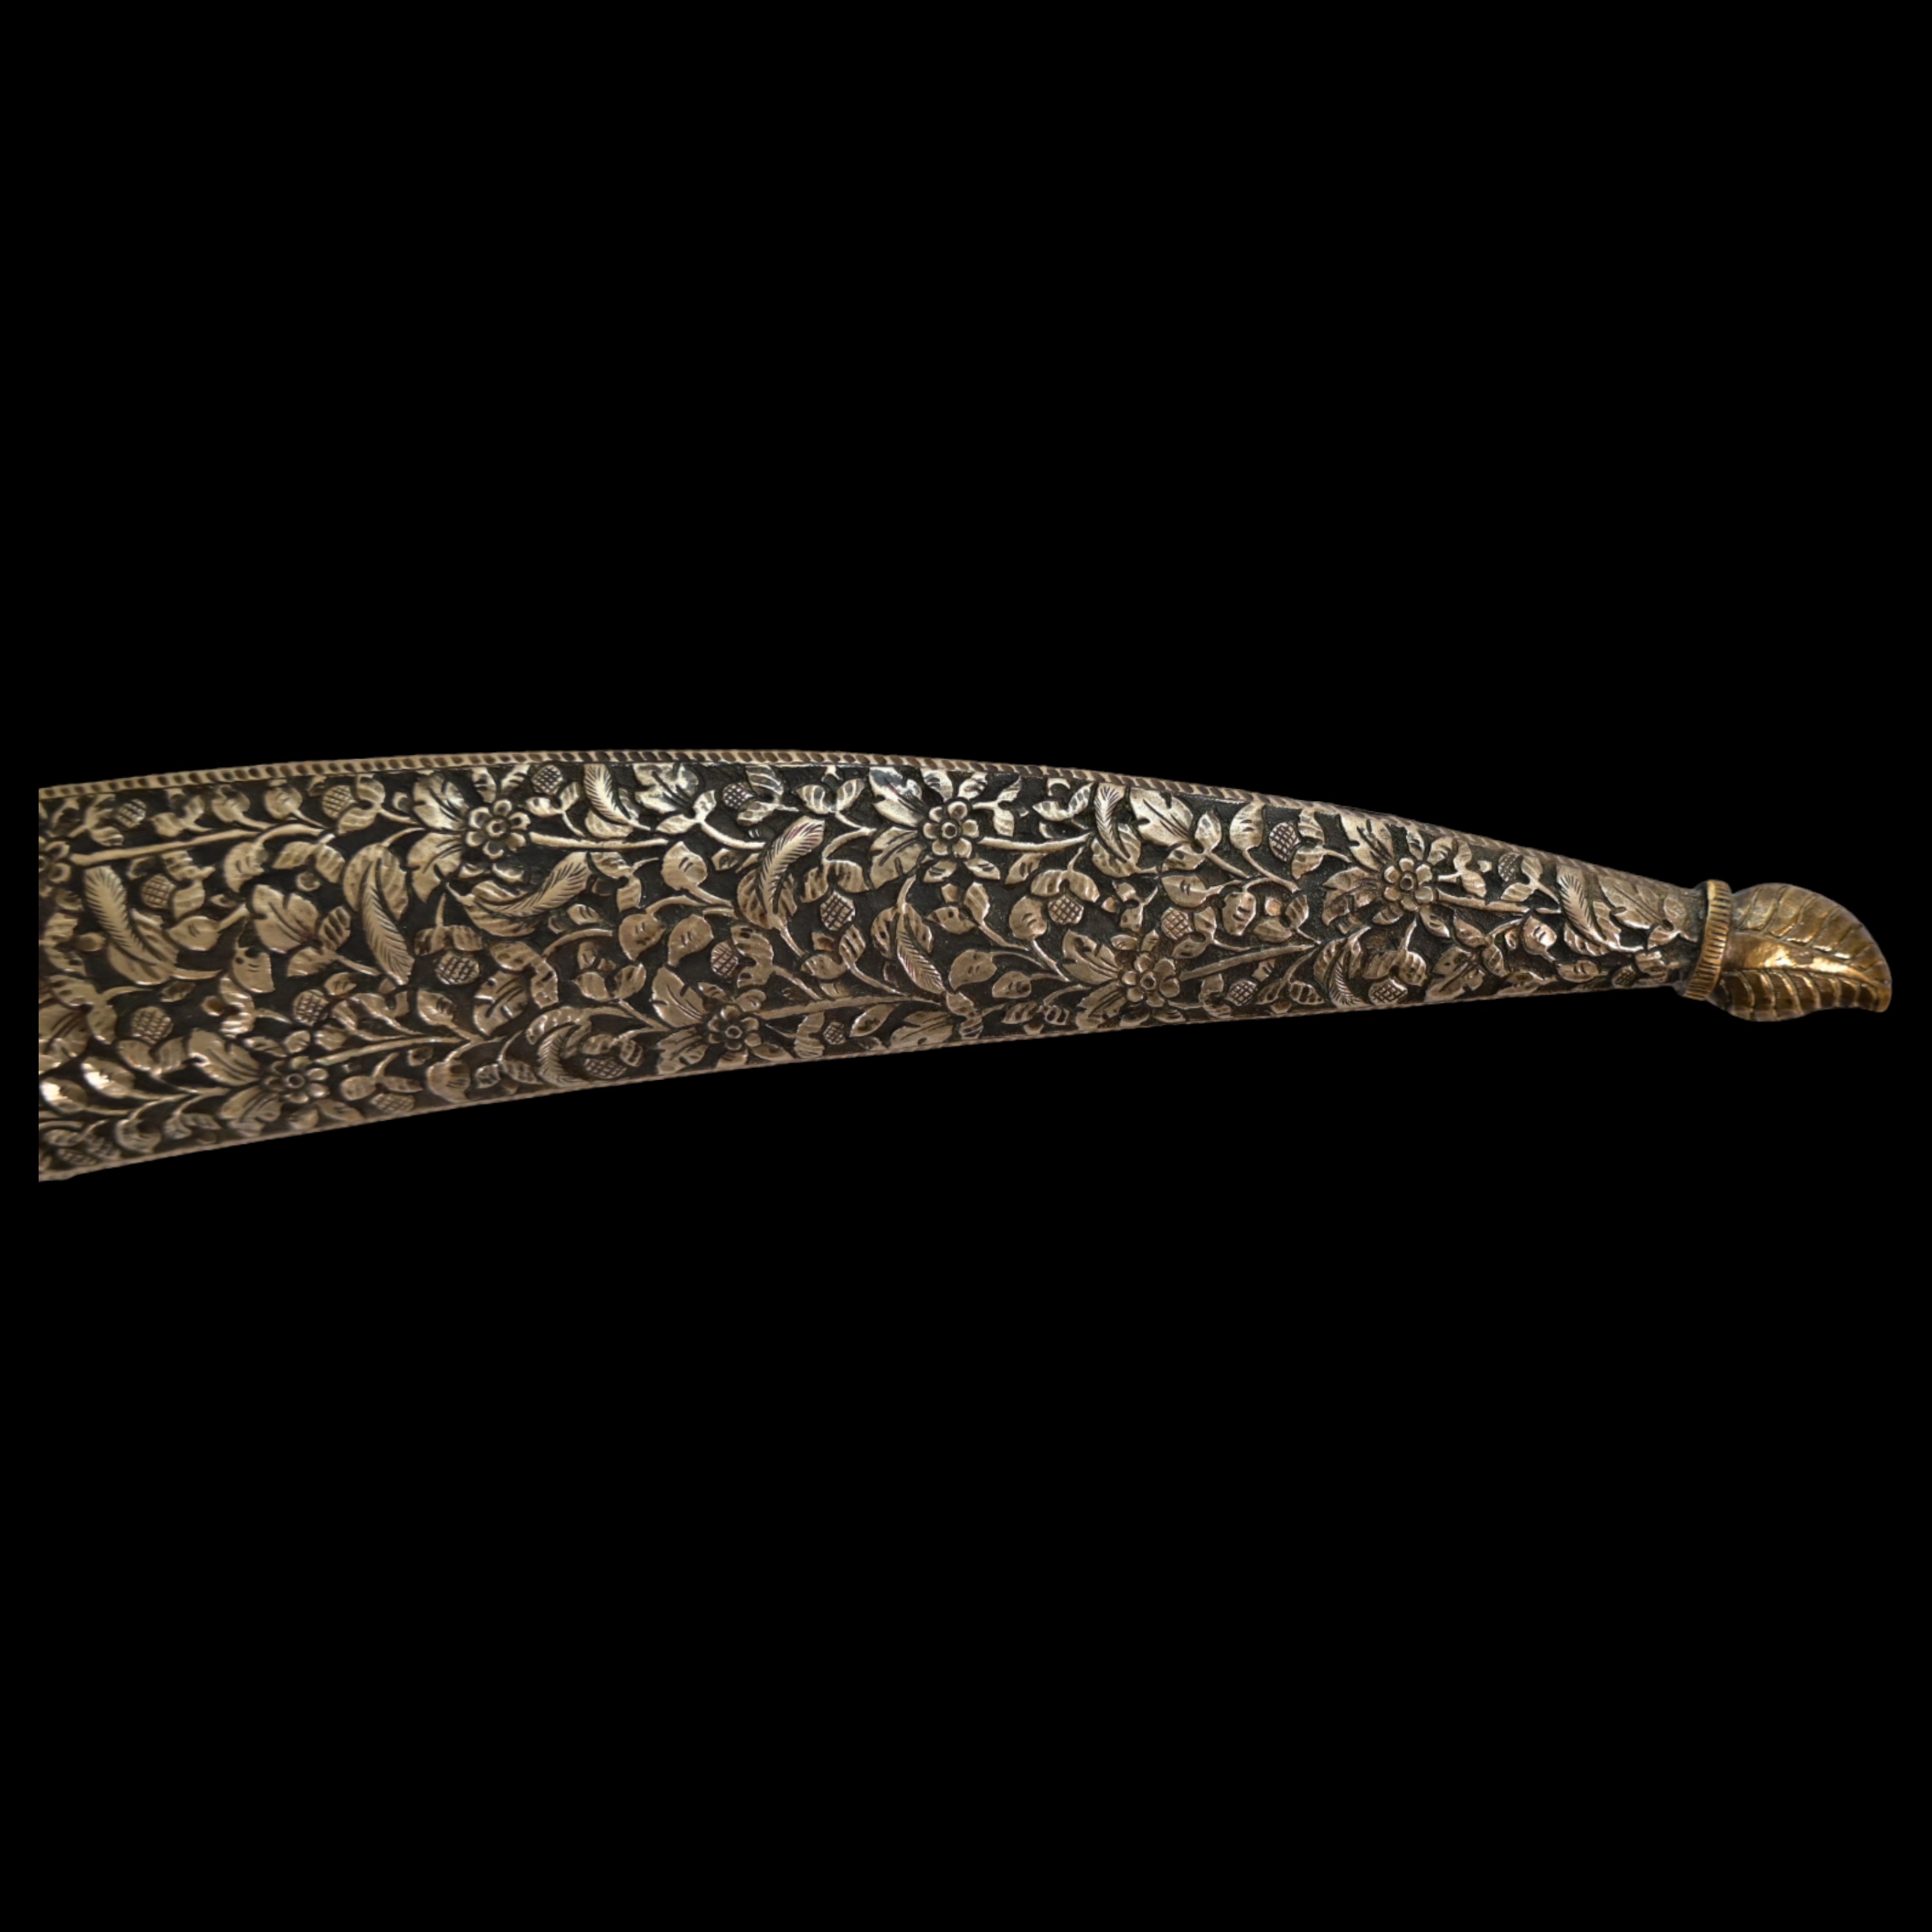 Very rare Dagger with jade handle, Wootz blade, precious stones and gold, Ottoman Empire, 18th C. - Bild 9 aus 19